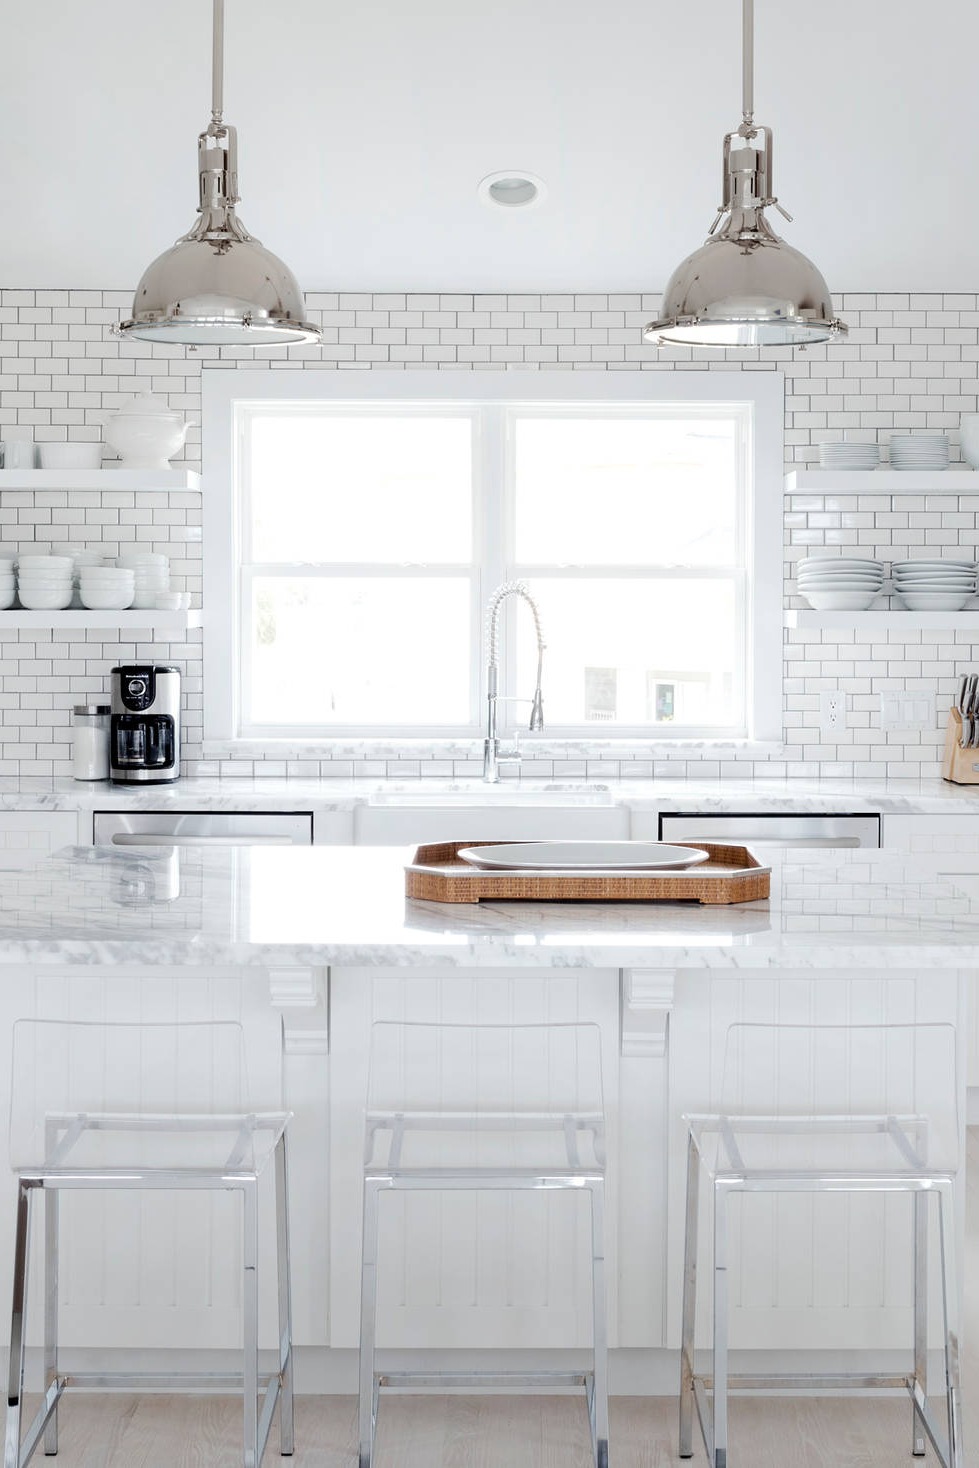 White Cabinets Kitchen Cabinet White Kitchen Shop Kitchen Cabinets Subway Tile Backsplash